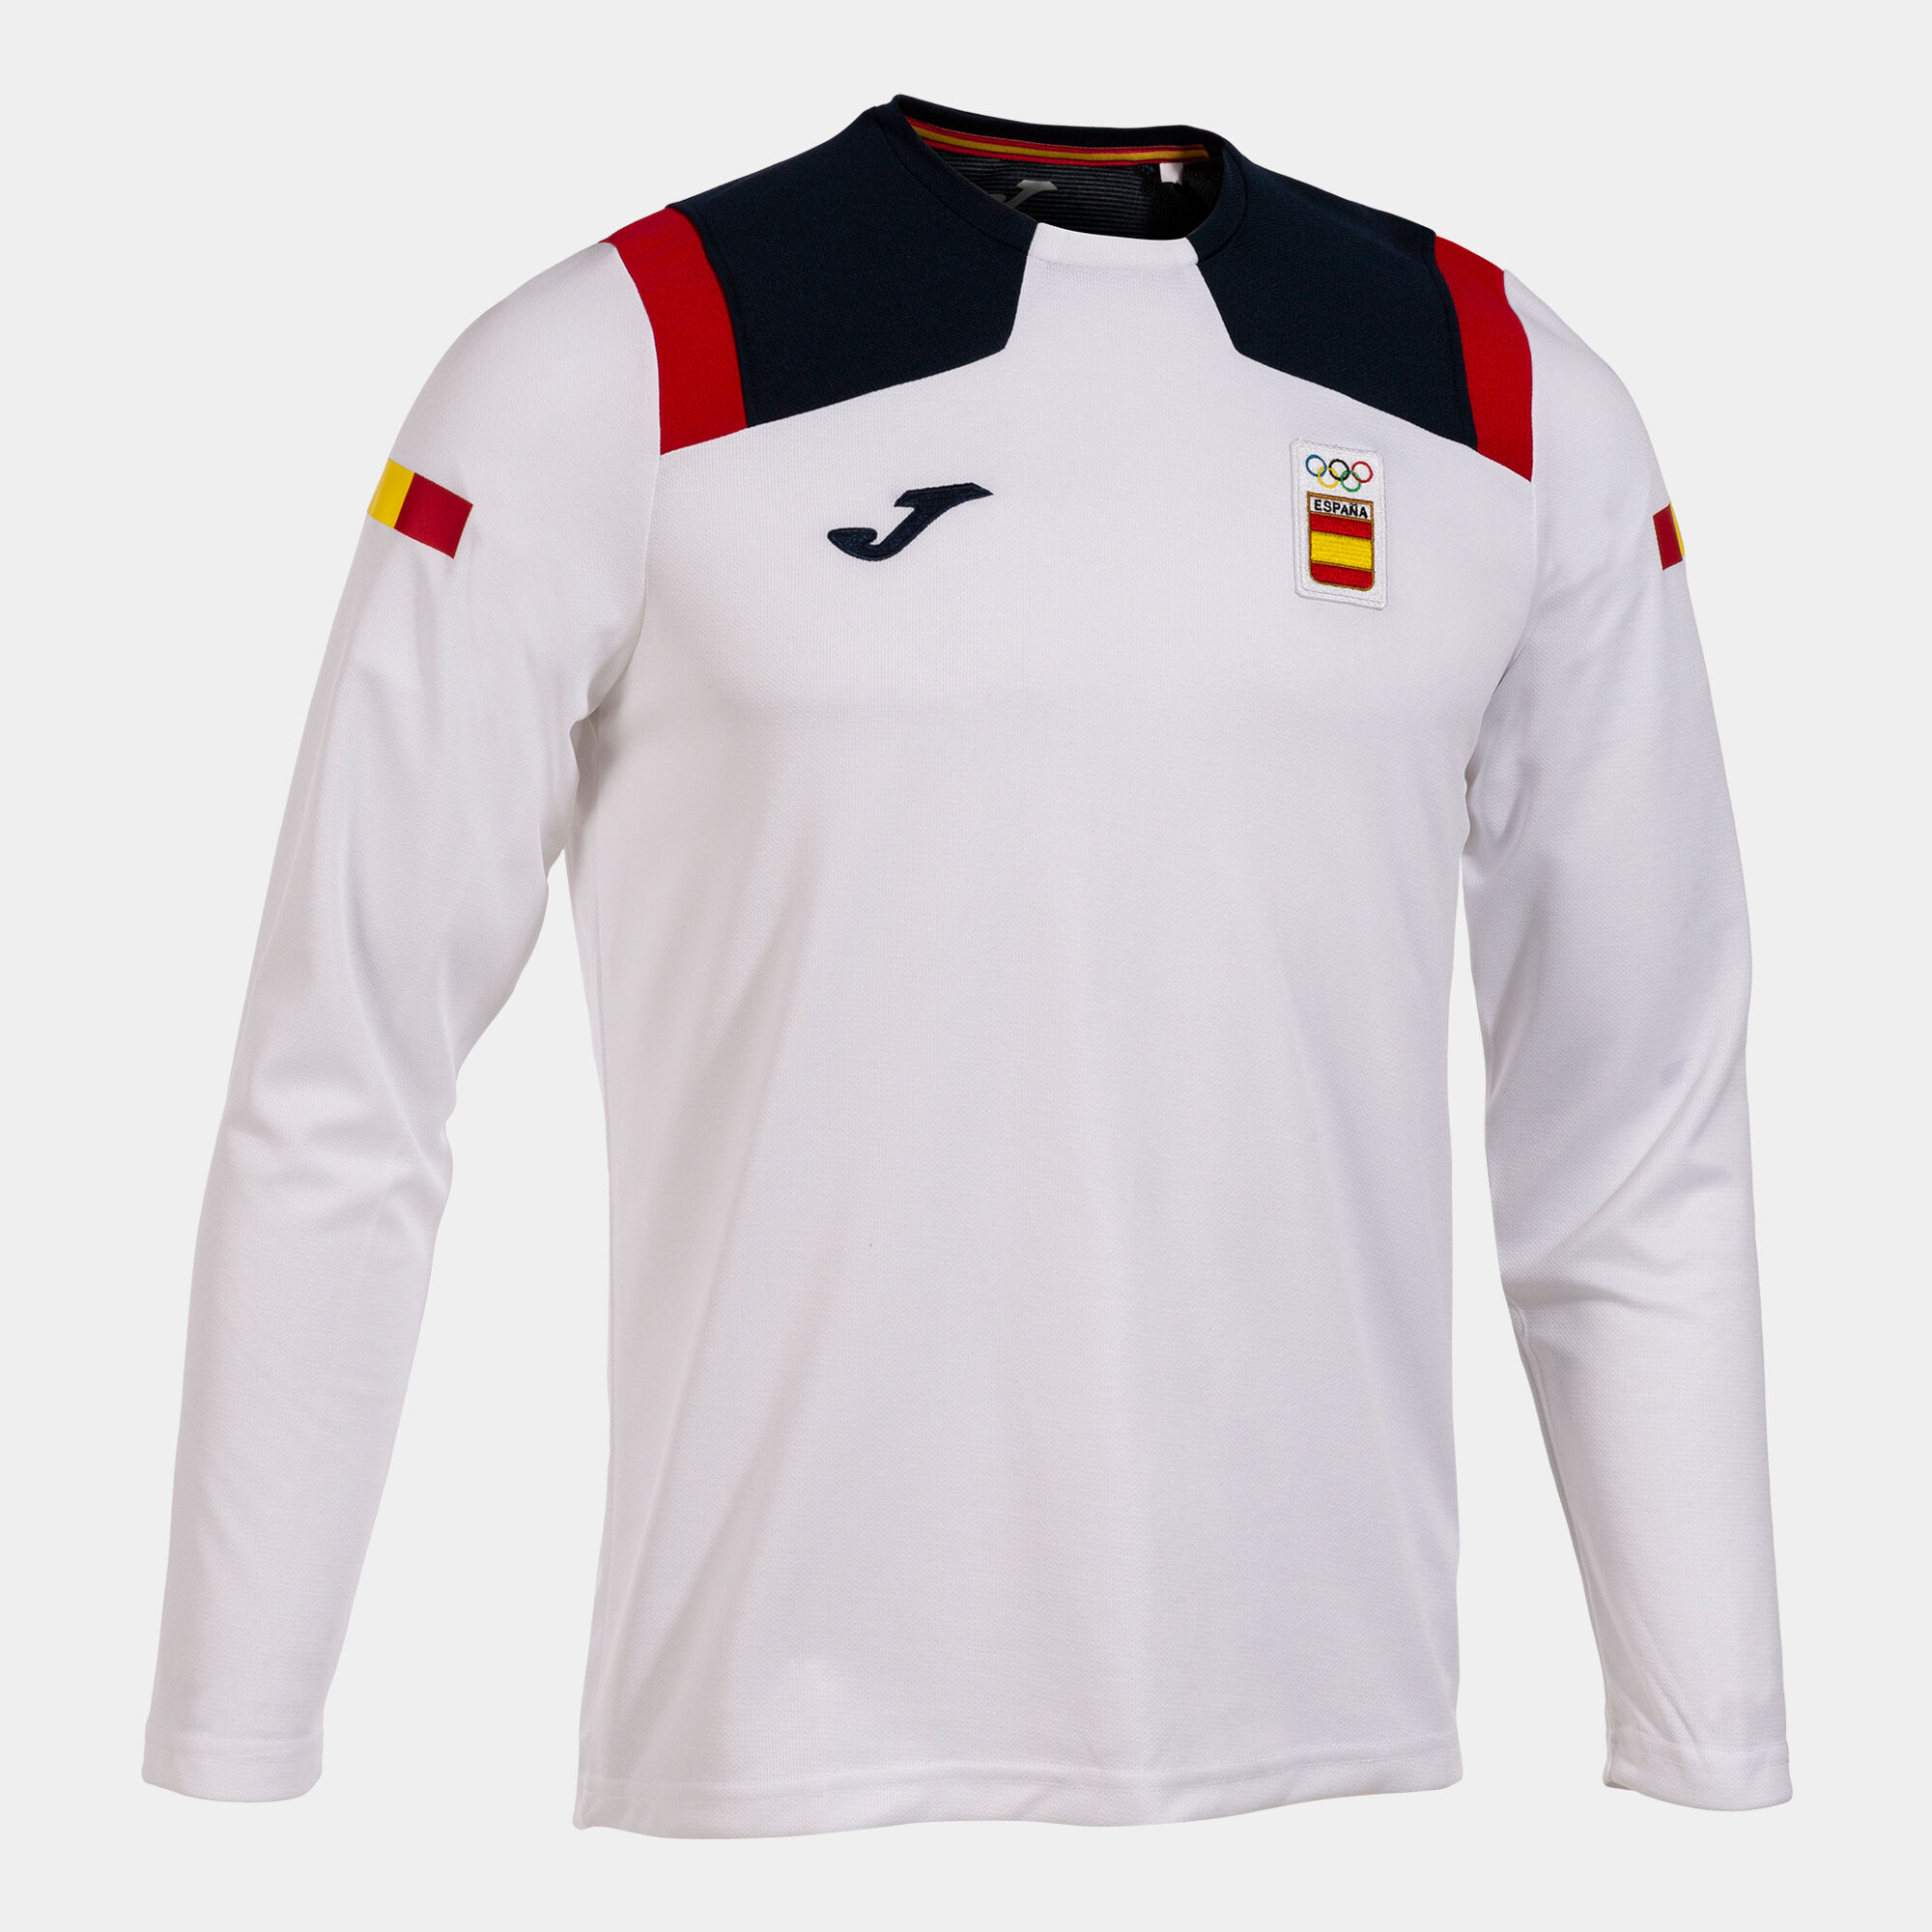 Camiseta manga larga Comité Olímpico Español